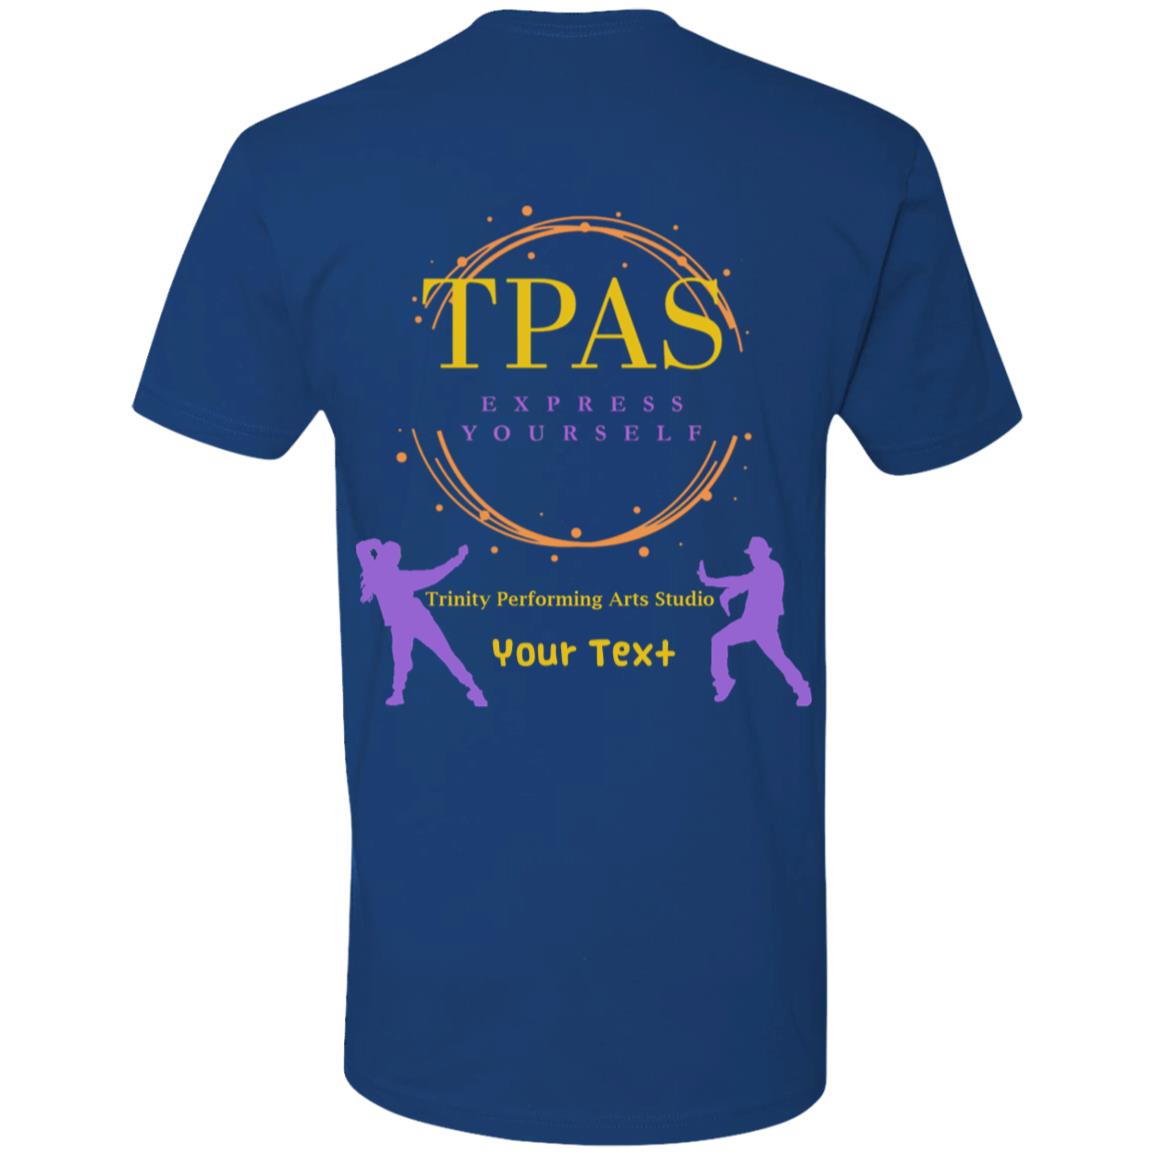 TPAS Youth Premium T-Shirt